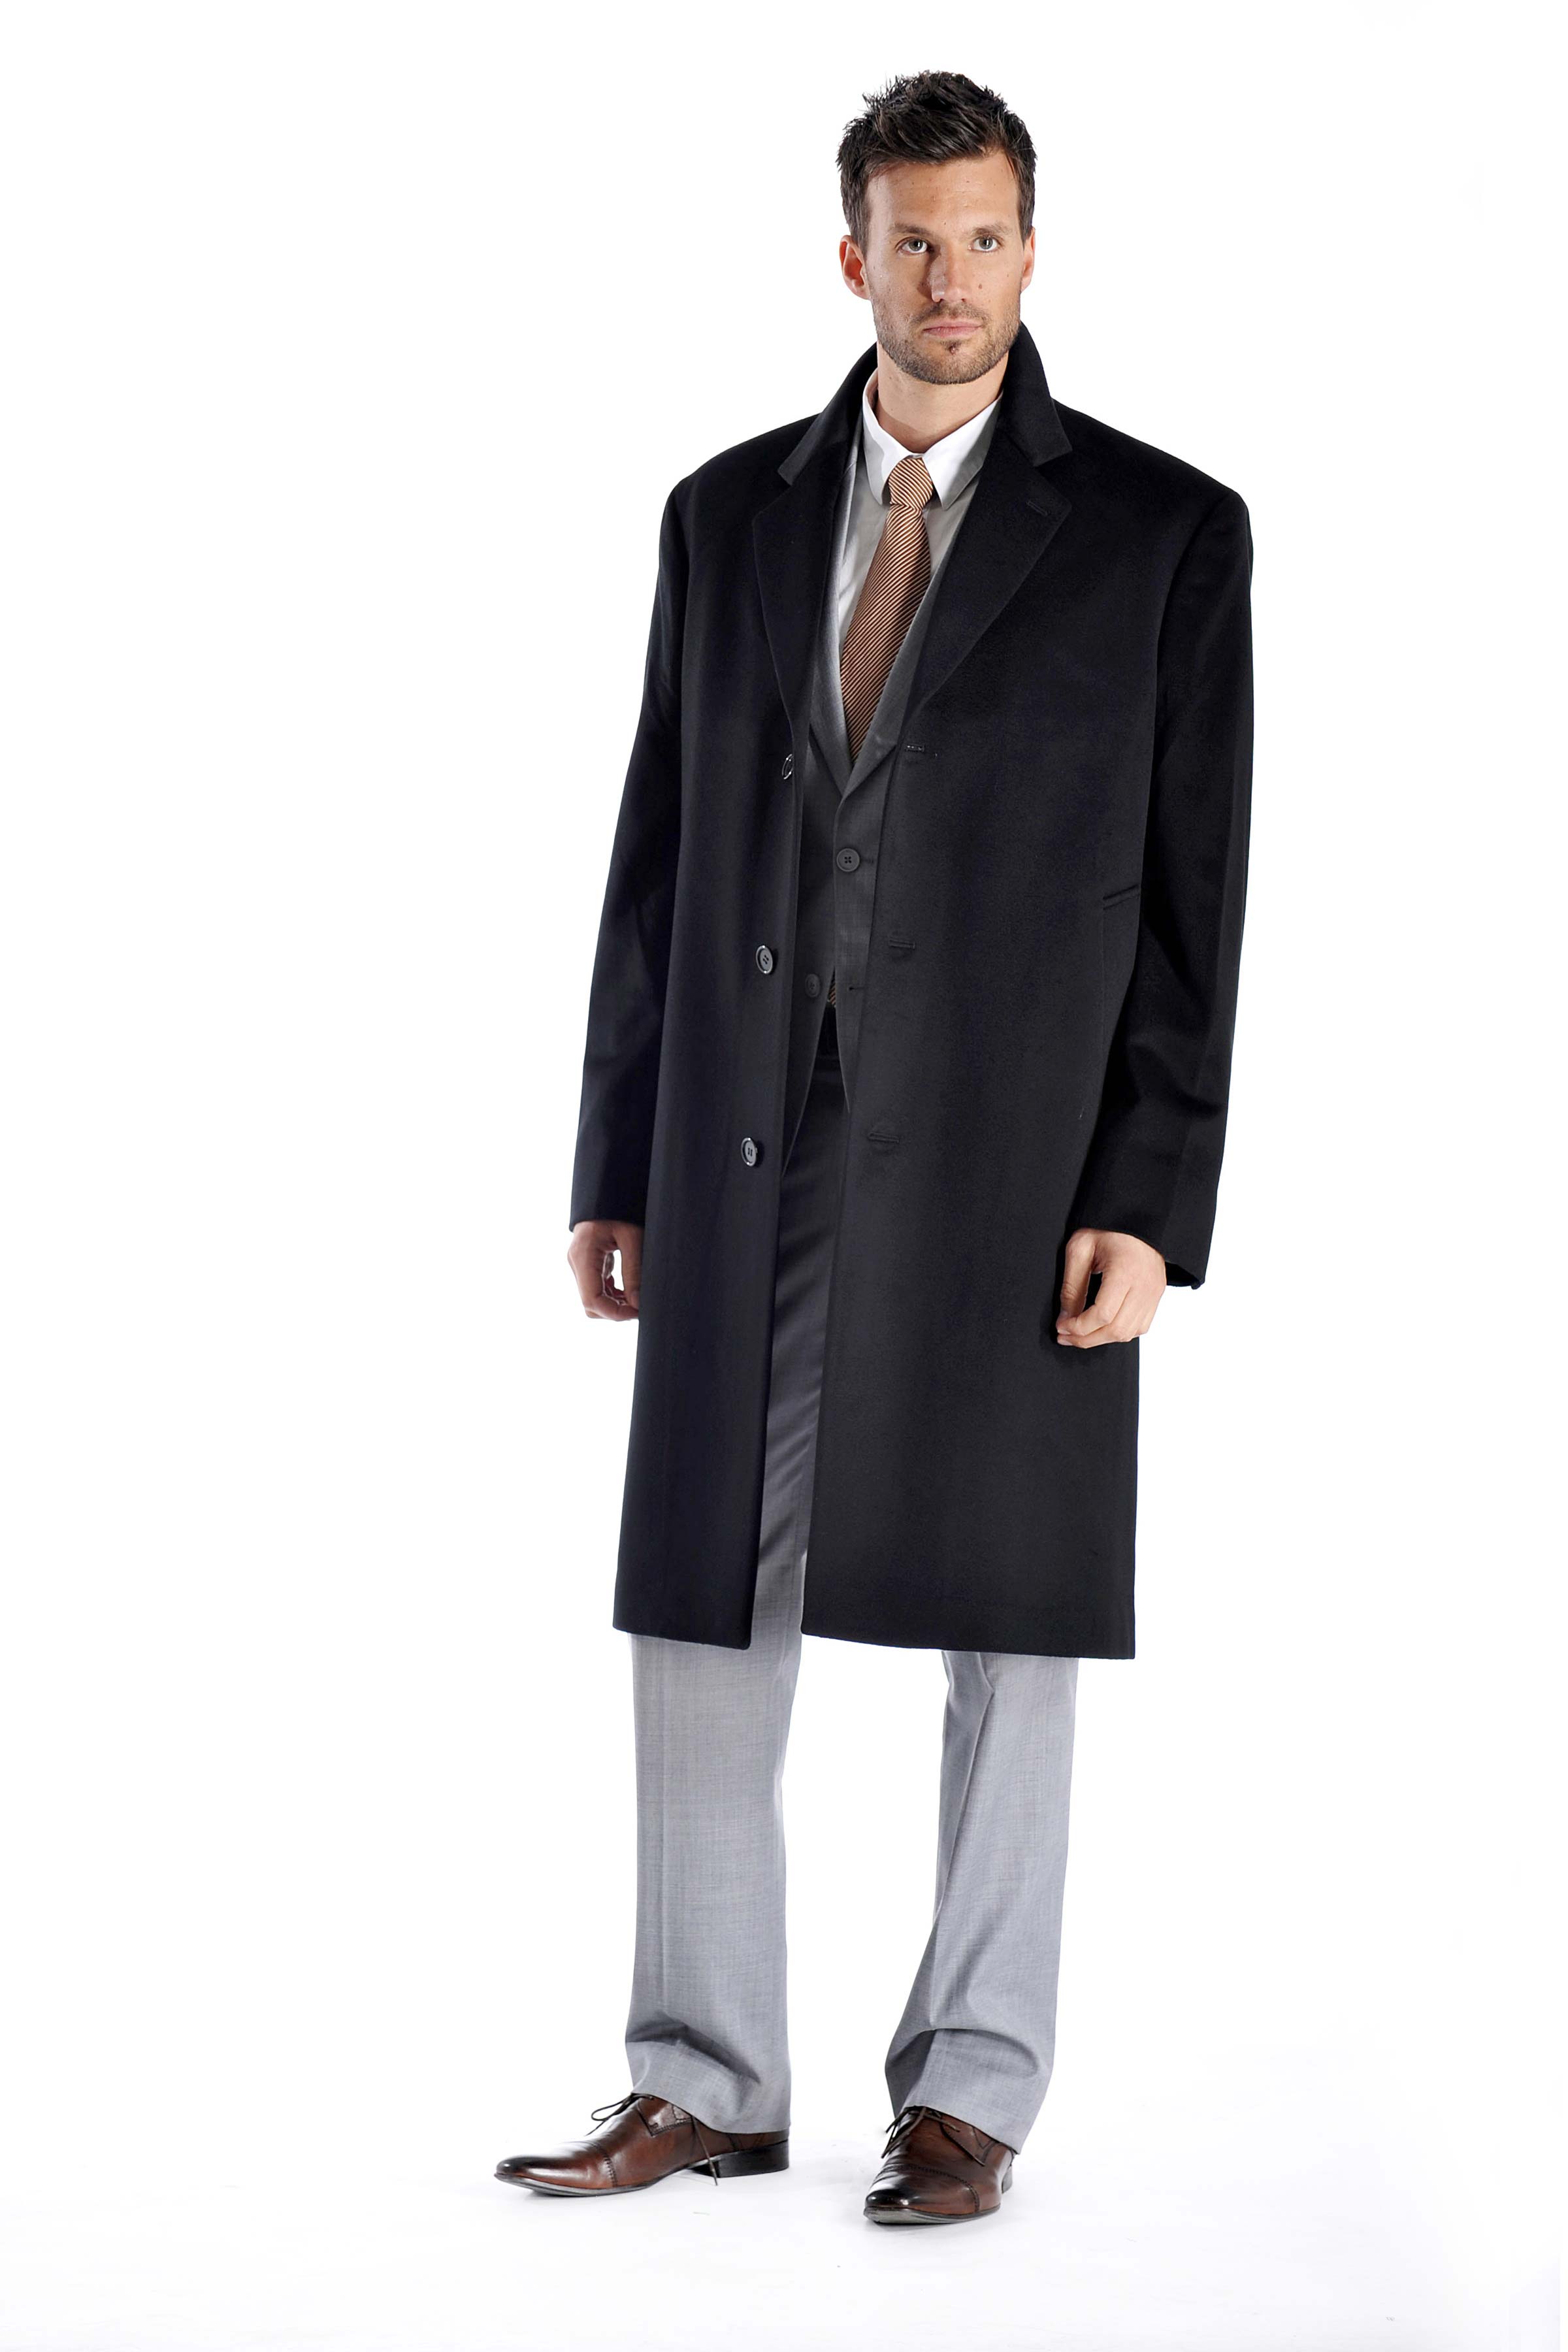 Pure Cashmere Knee Length Coat for Men (Black, 46)